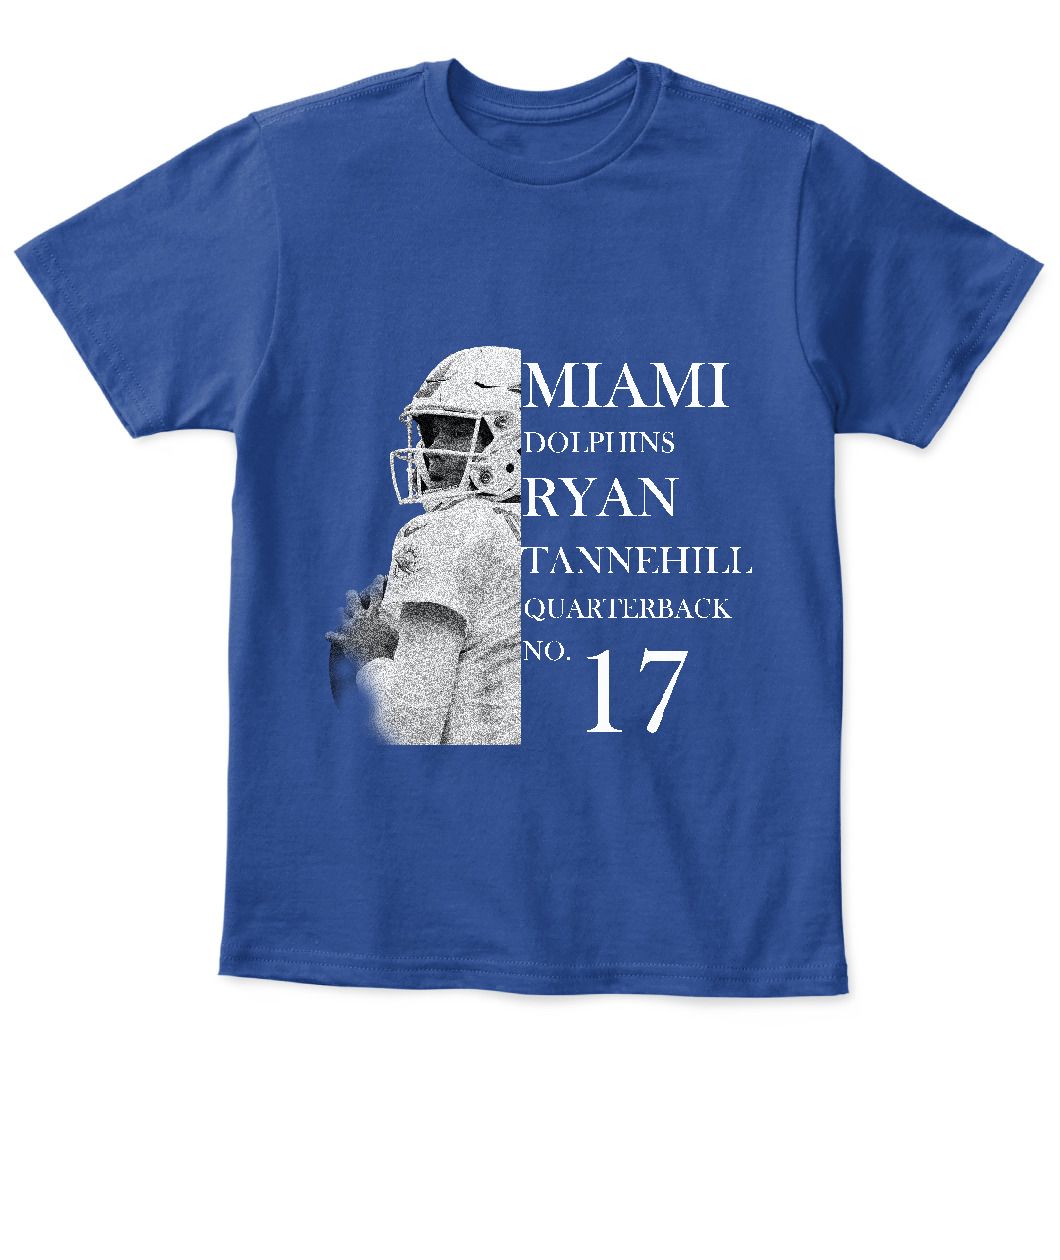 Miami Dolphins Shop - Miami Dolphins Ryan Tannehill T shirt 6